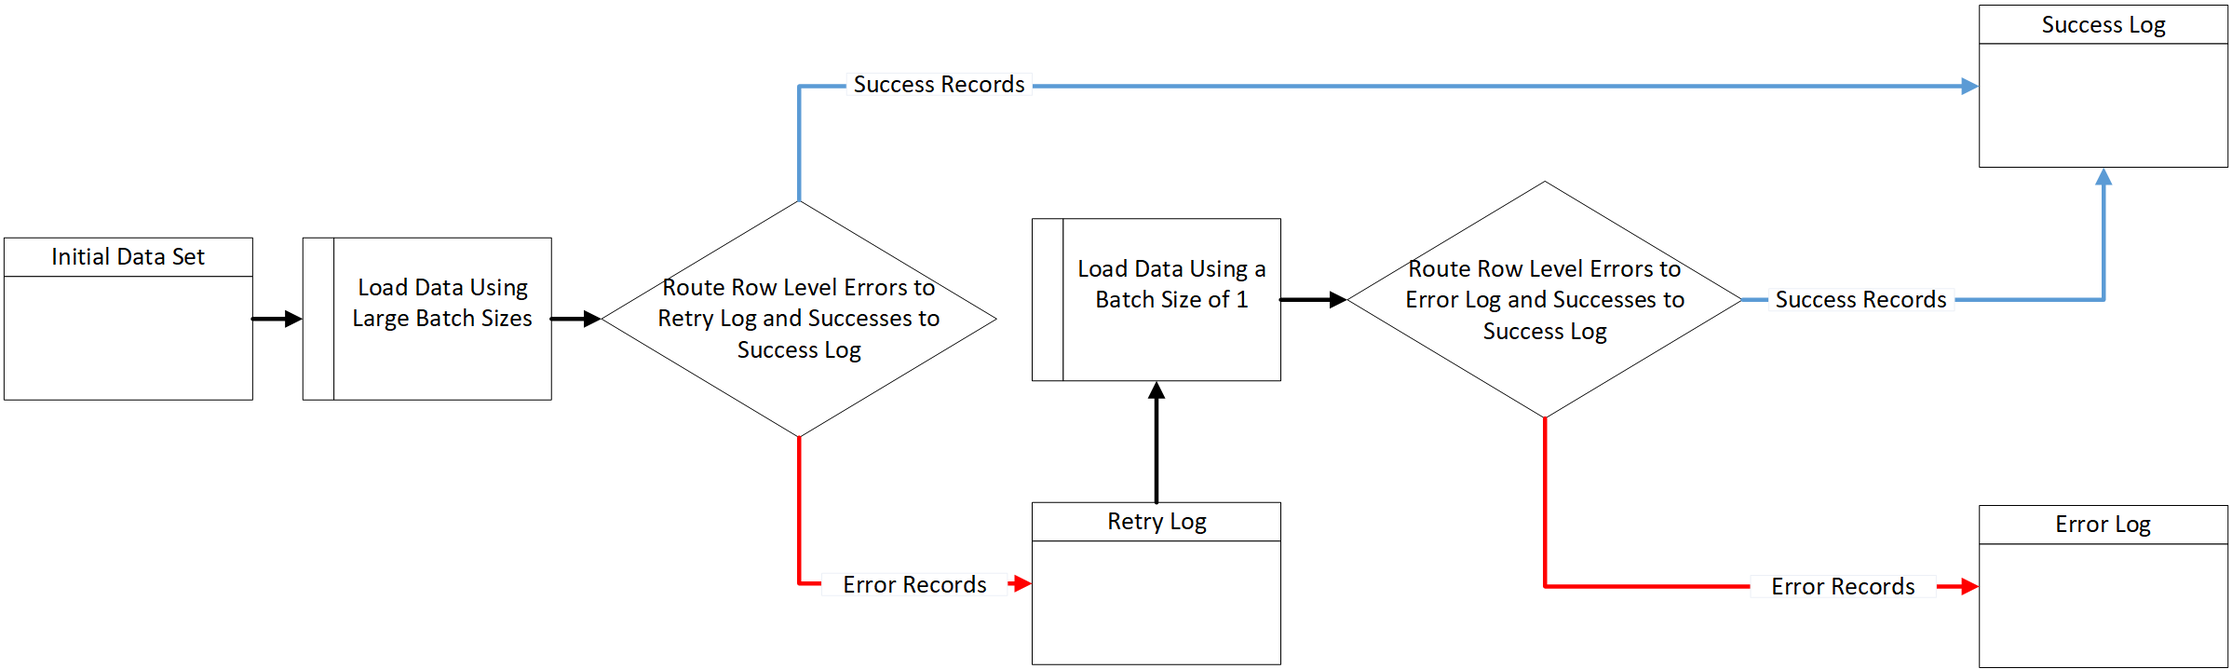 Diagrammed Process